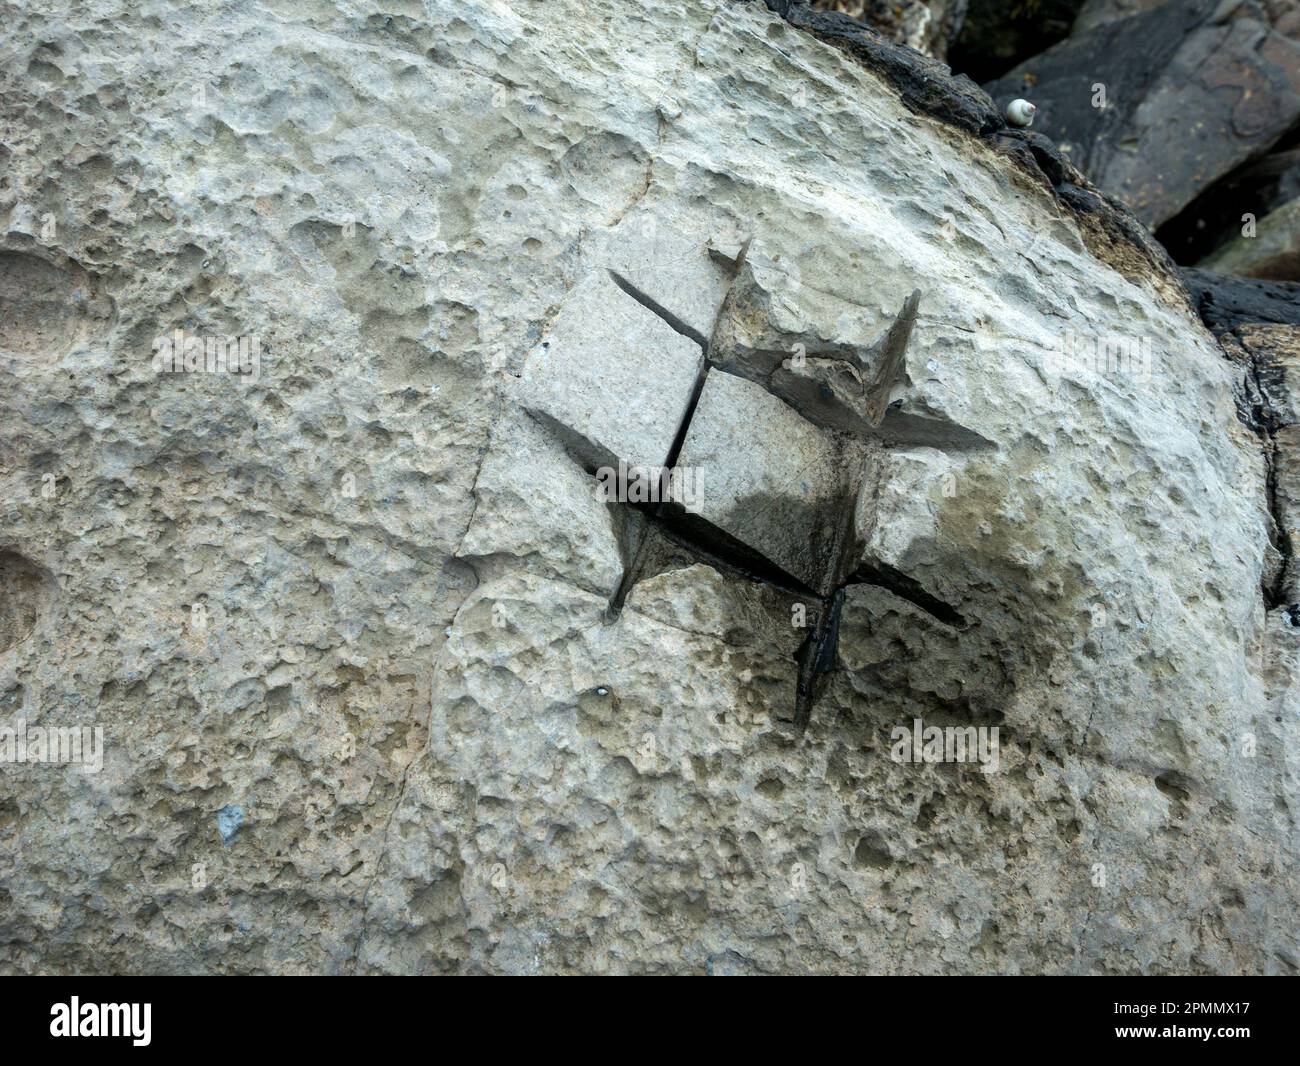 Crude rock 'core' sampling using angle grinder slit cuts into boulder on Elgol beach, Isle of Skye, Scotland, UK Stock Photo